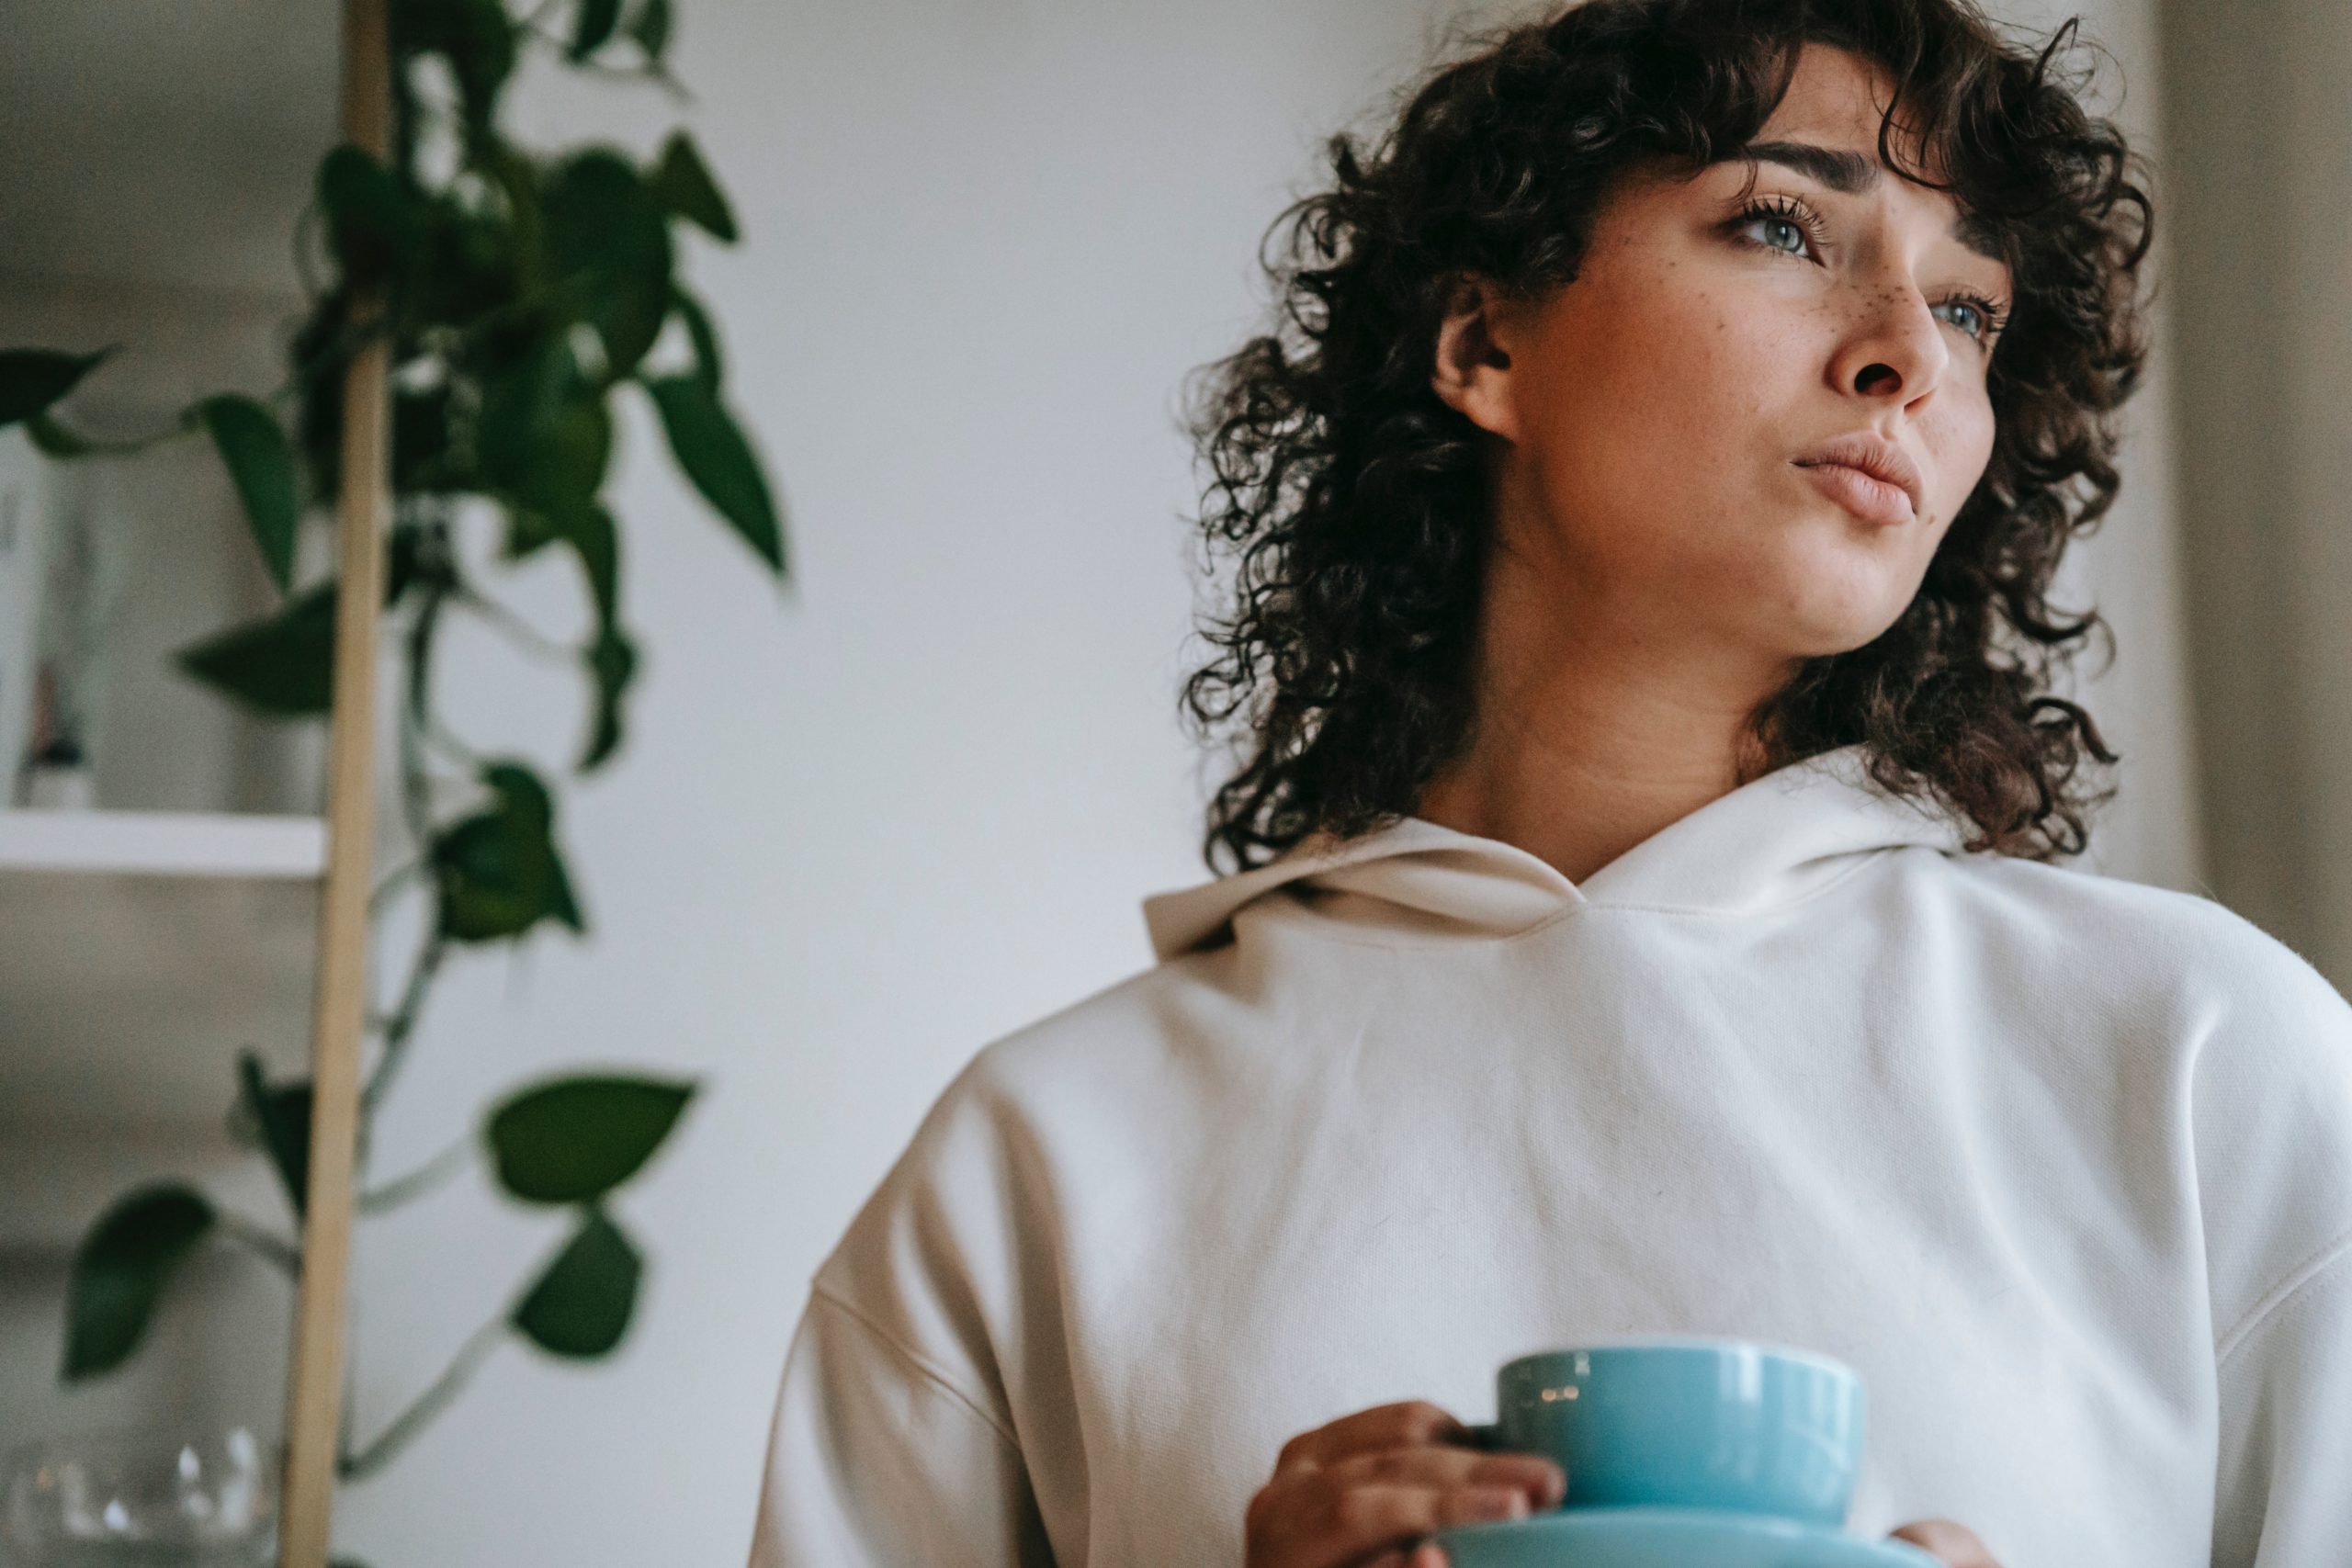 A woman looking pensive as she holds a mug of tea.